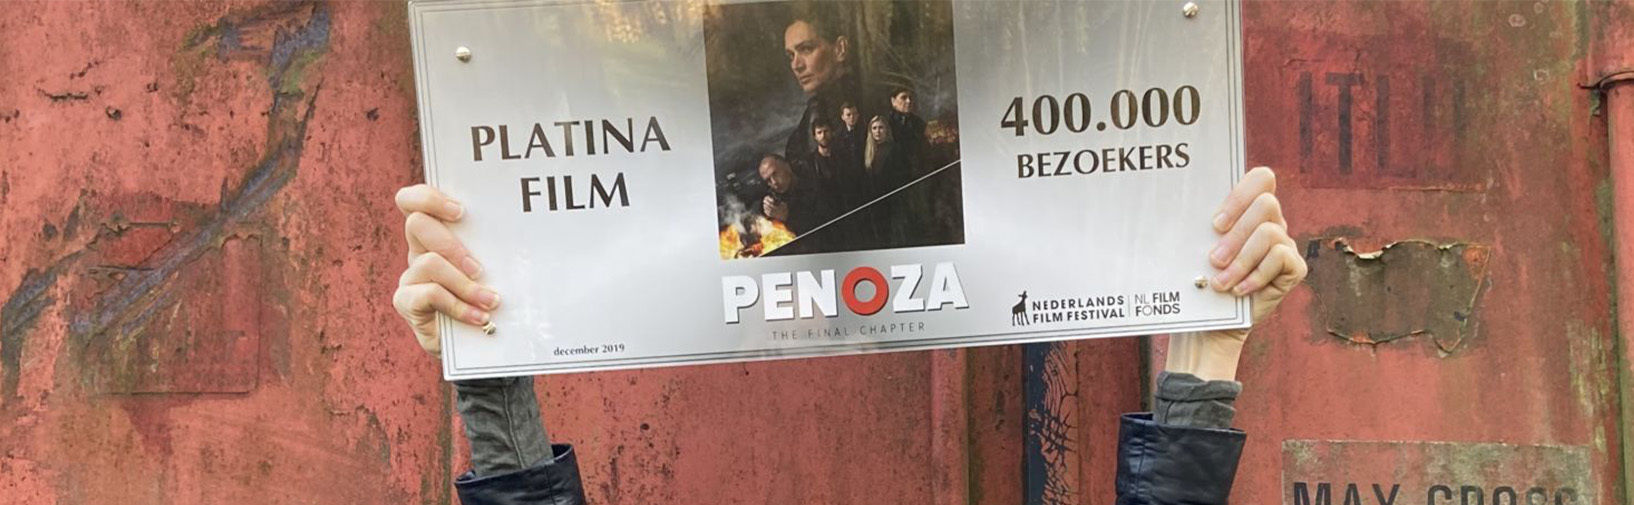 Platina Film for Penoza: The Final Chapter hero image